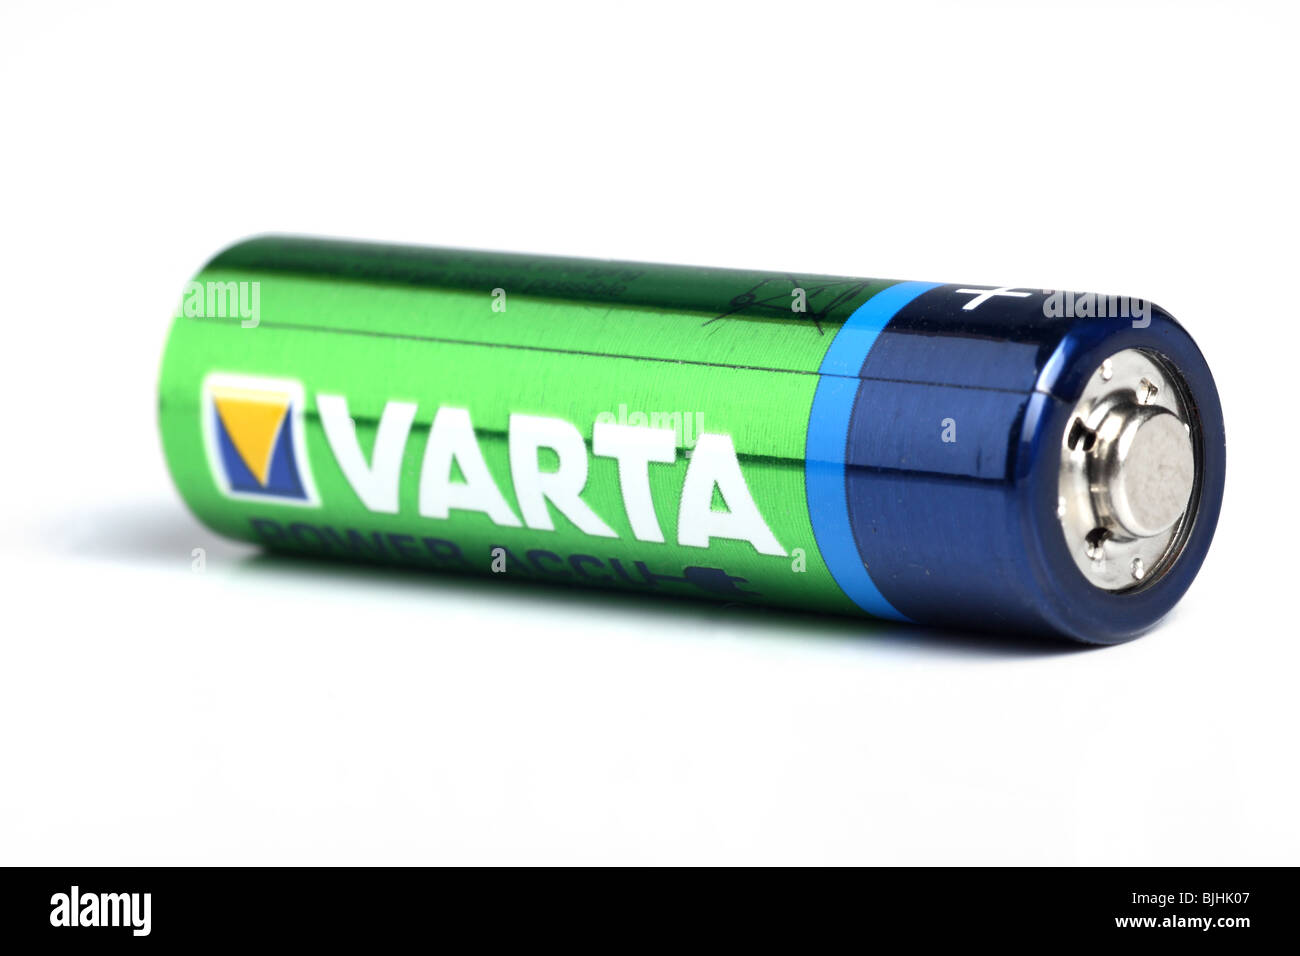 Piles lithium AA - Varta - LR06 x 4 Varta